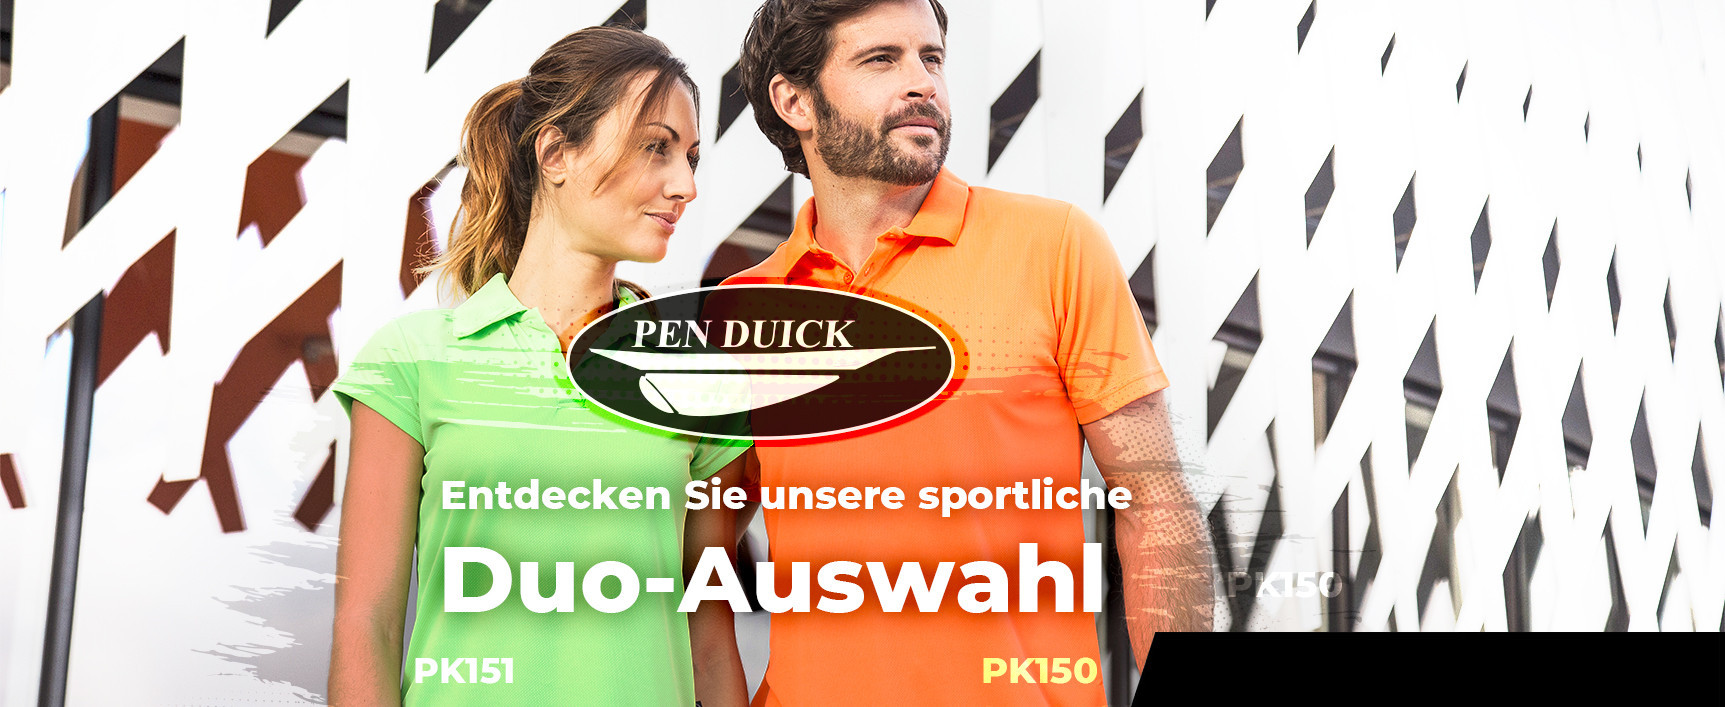 Pen Duick - Duo sport